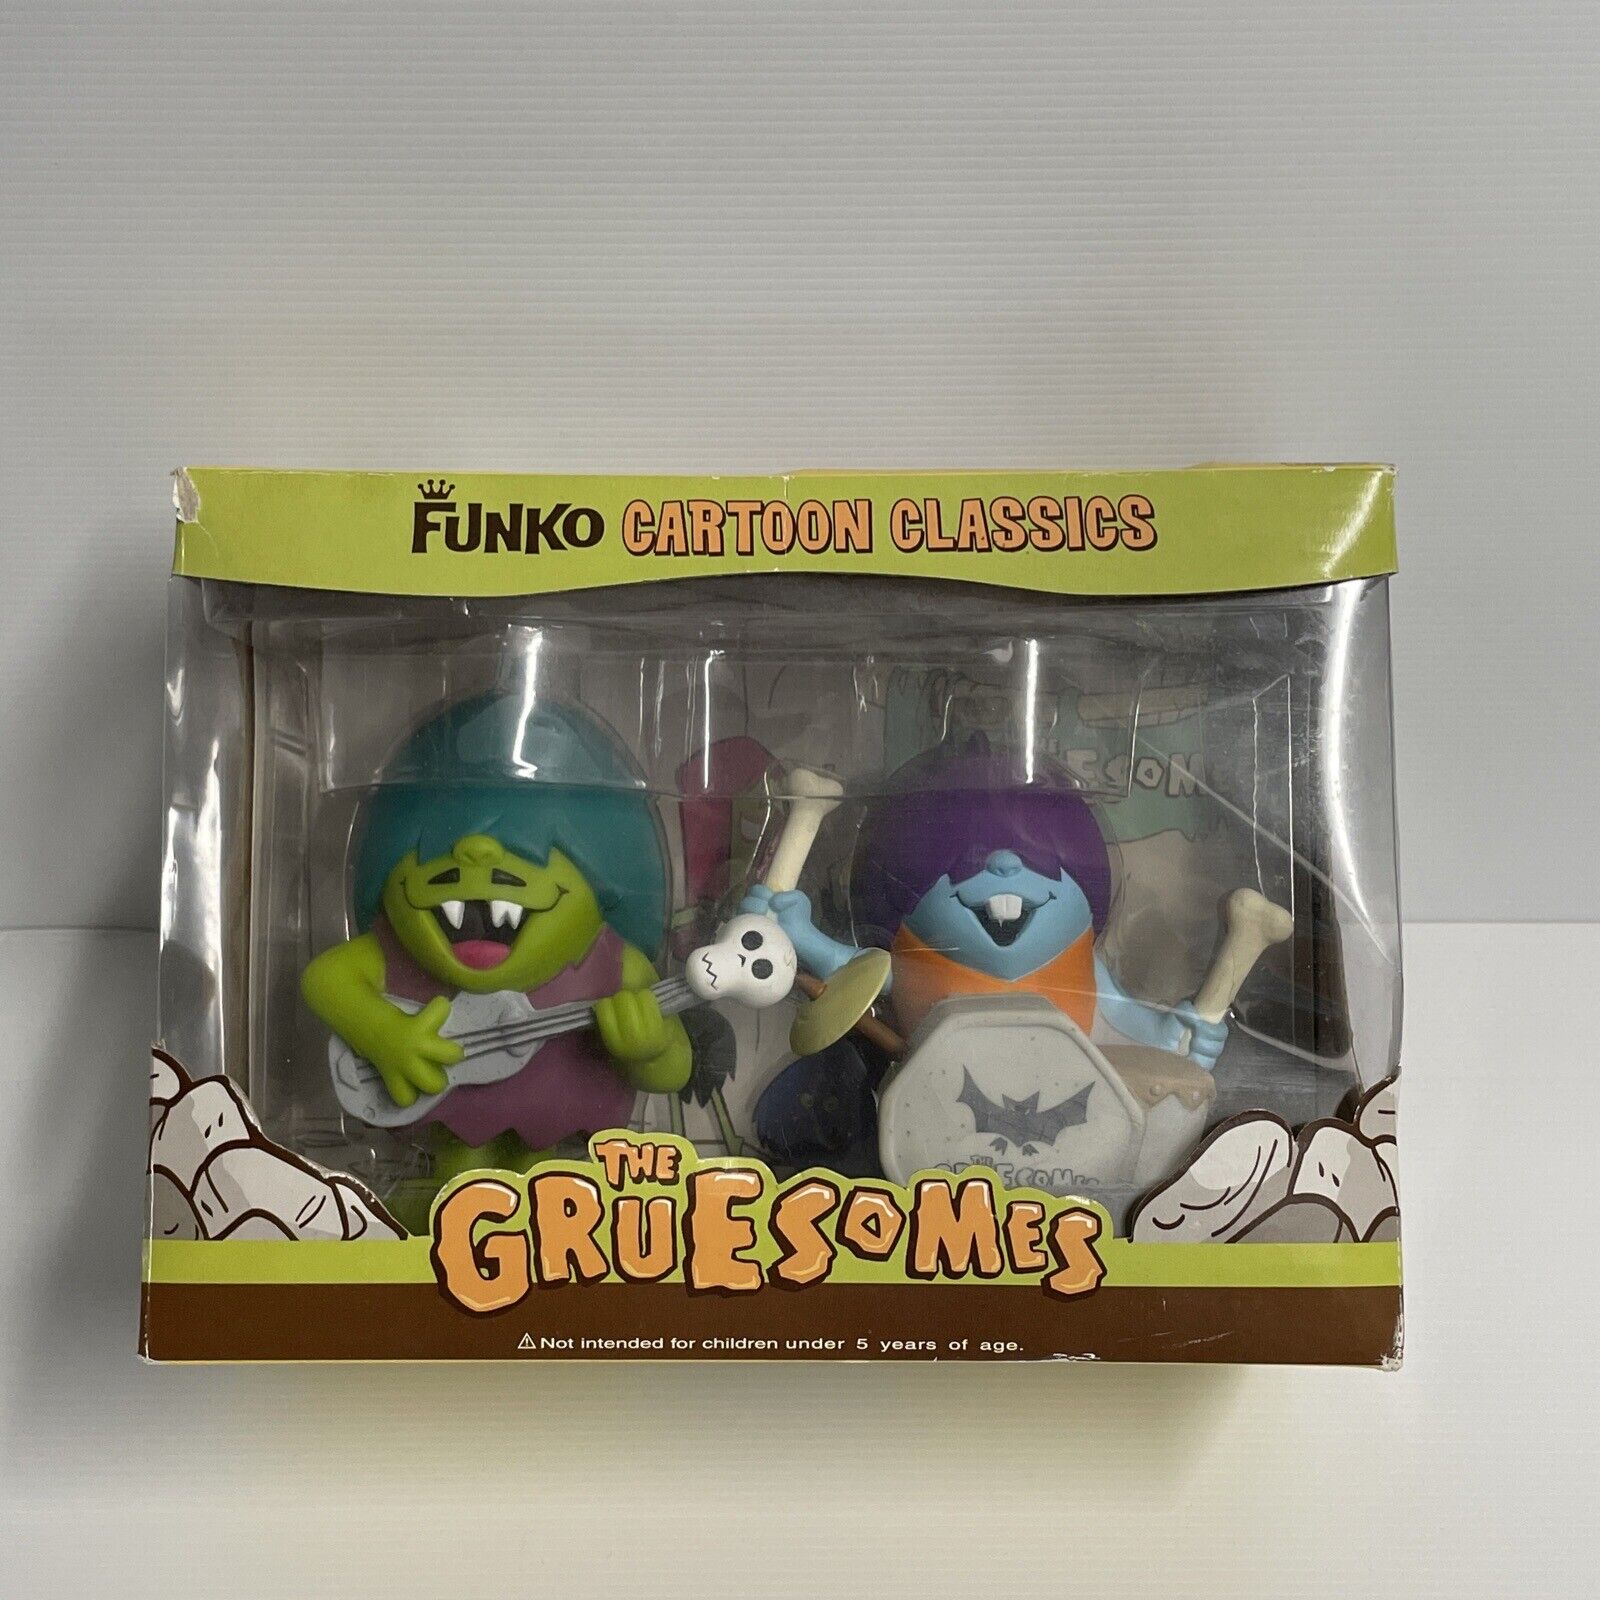 RARE HTF The Gruesomes Funko Cartoon Classics New in Box